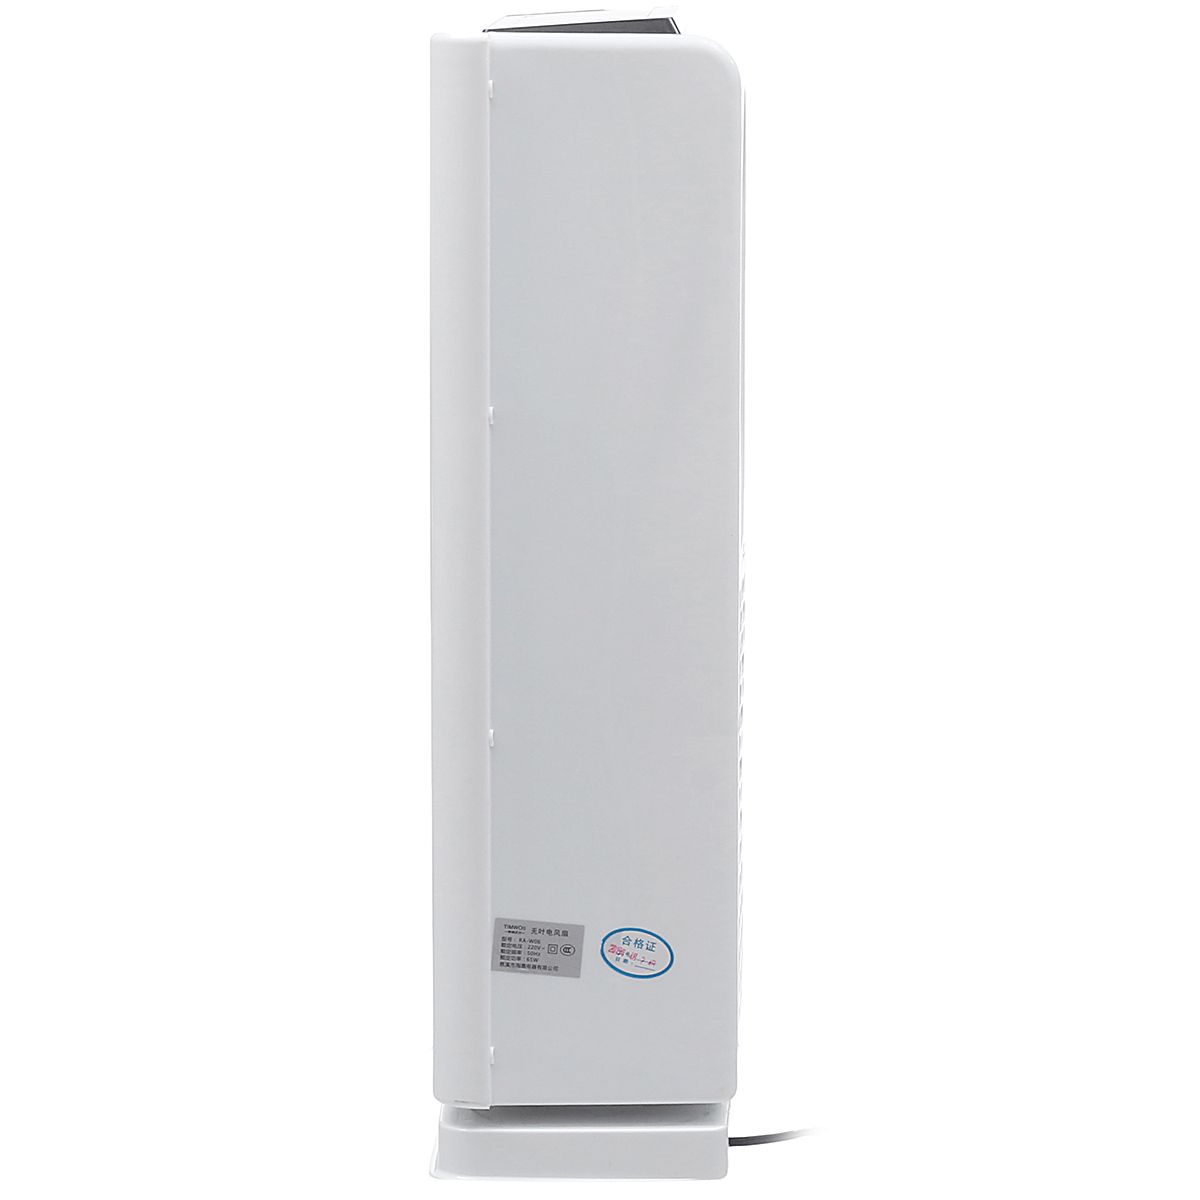 Ladeless-Handheld-Fan-Desktop-Mini-Fan-No-Leaf-Airflow-Cooling-Blower-with-Mist-Spray-Mosquito-Eradi-1531958